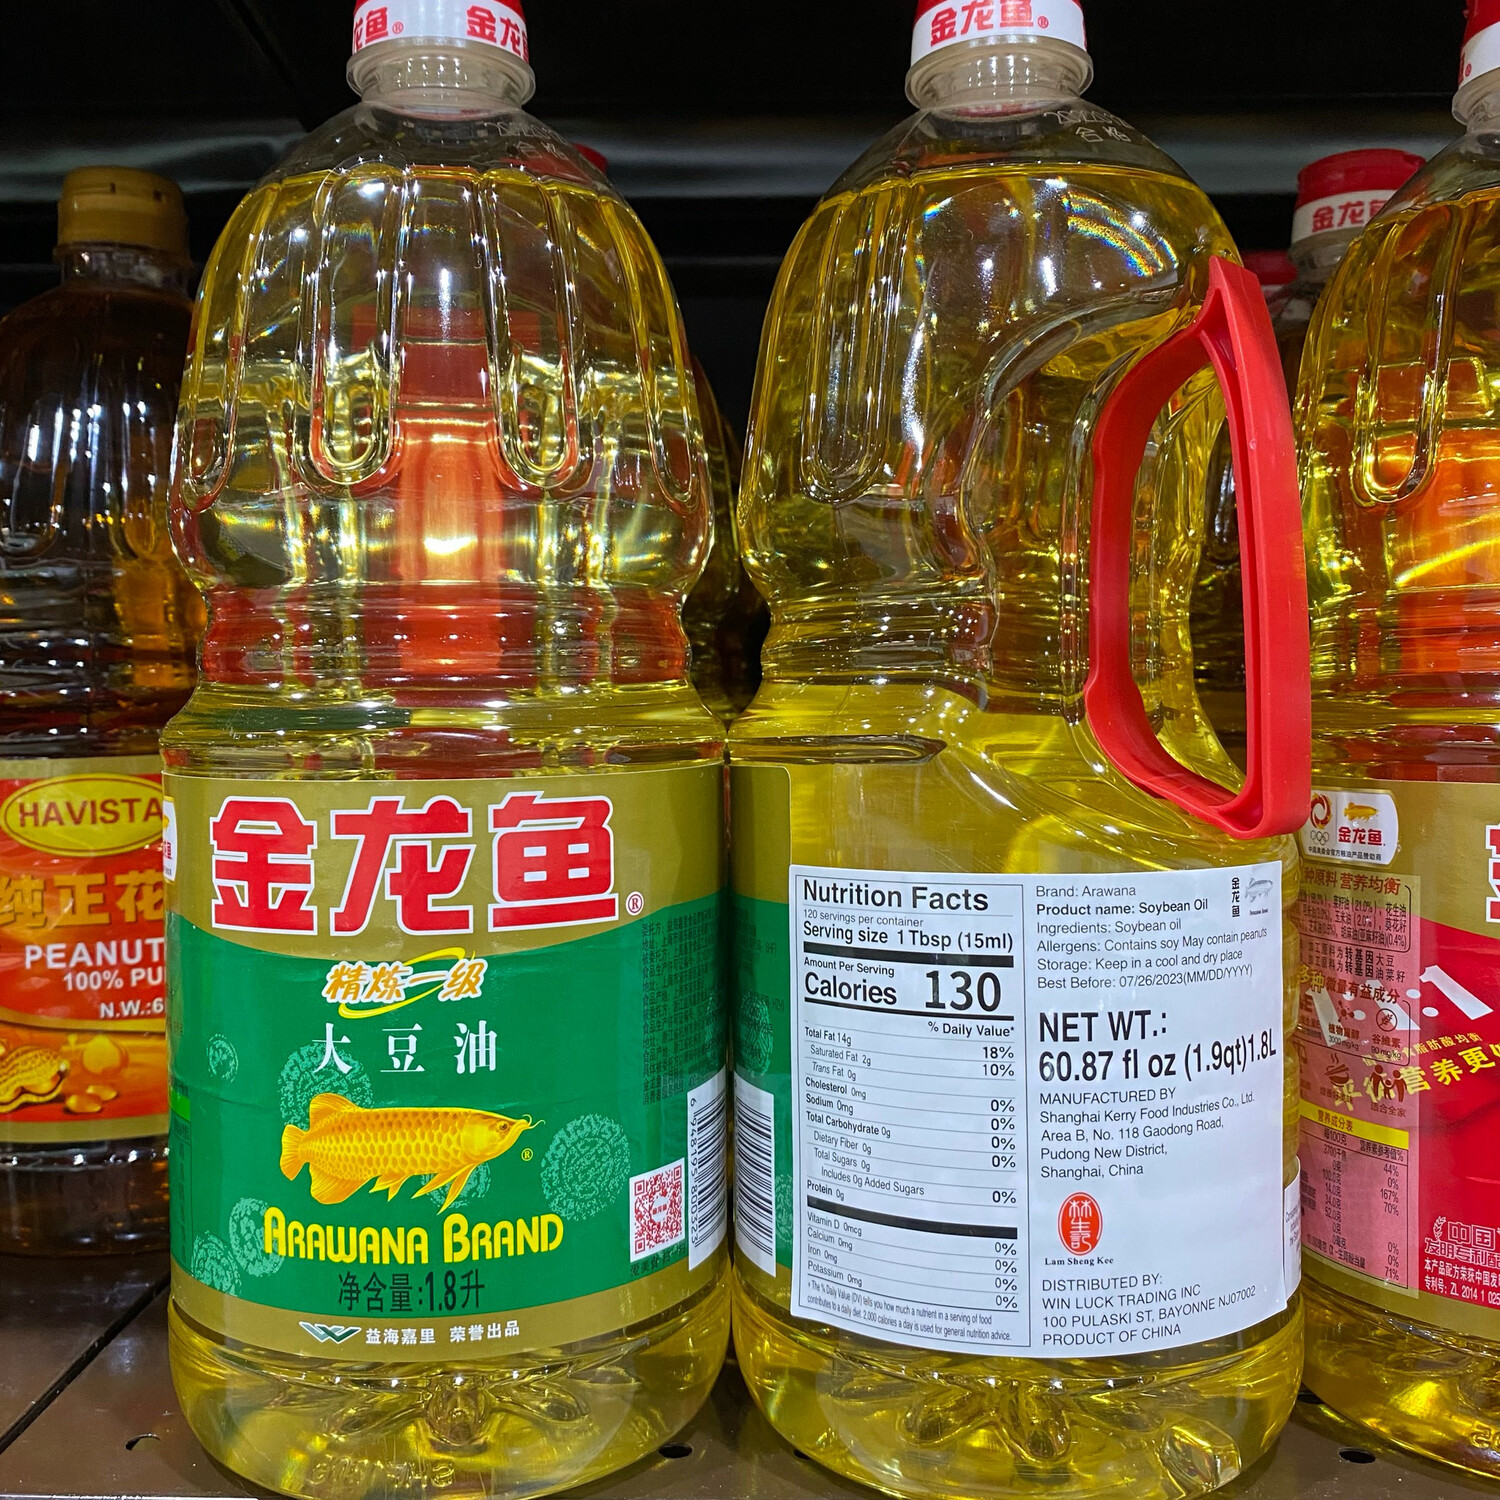 GROC【杂货】金龙鱼 大豆油 1.8L